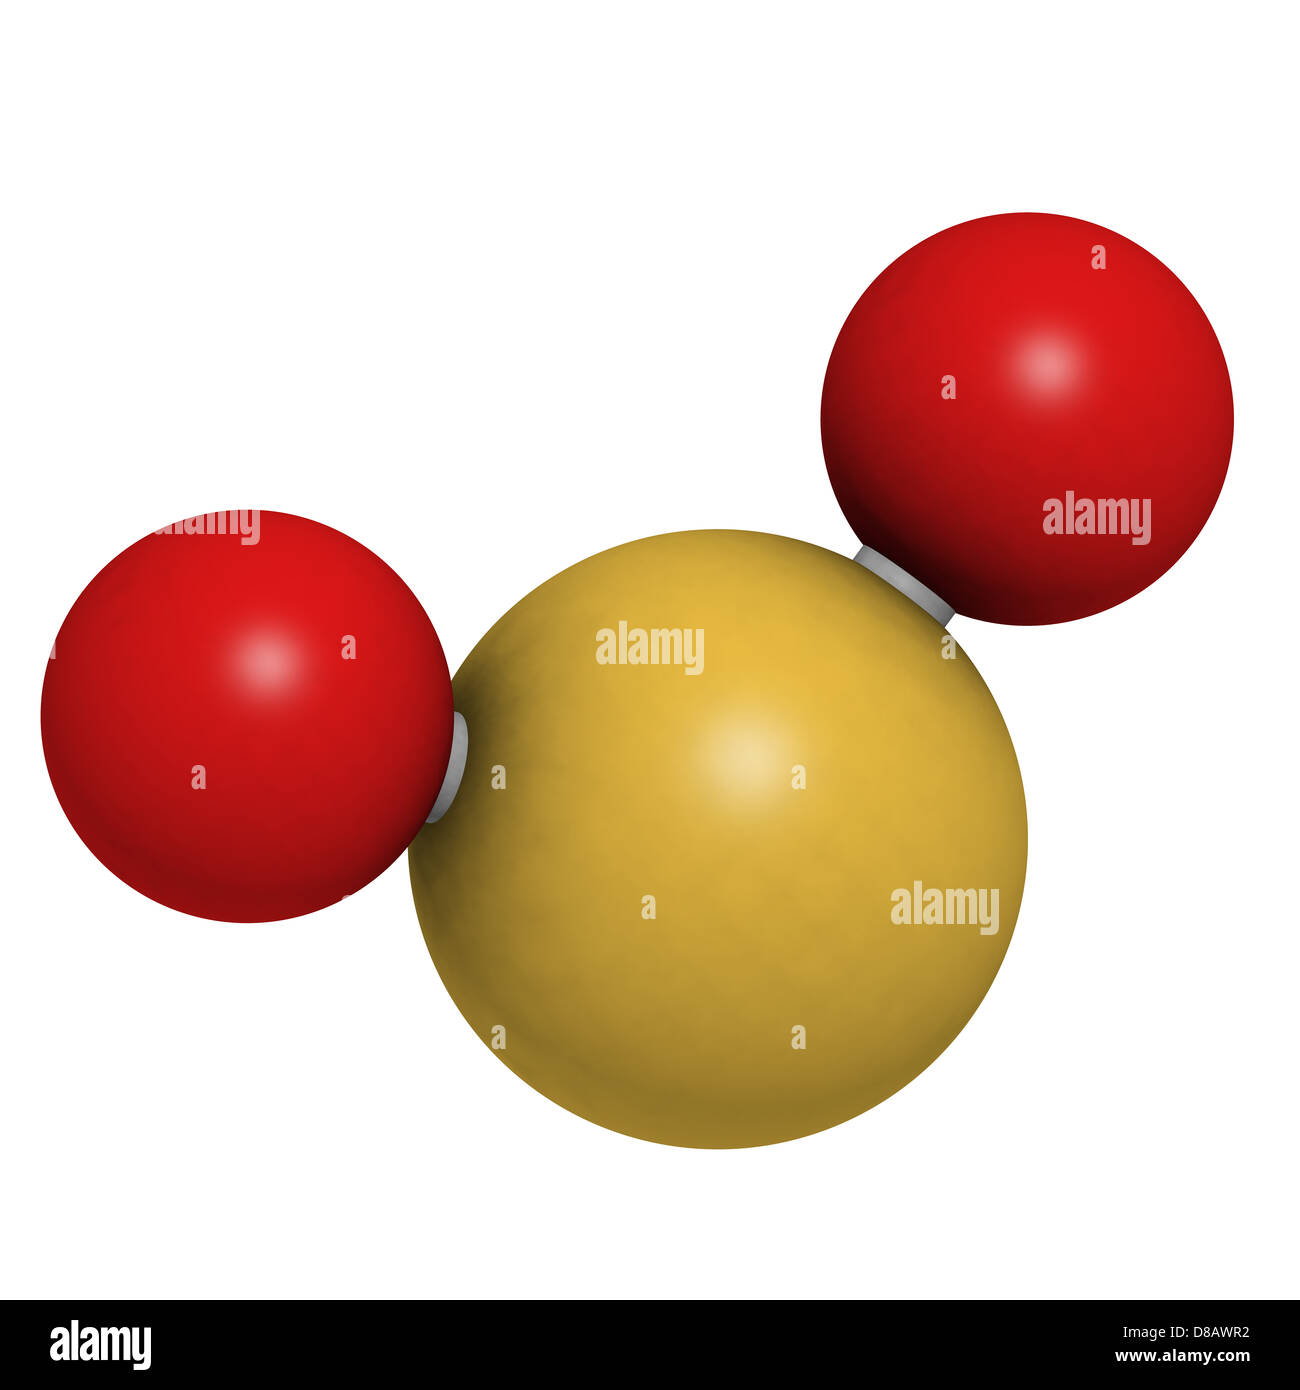 sulfur dioxide molecule